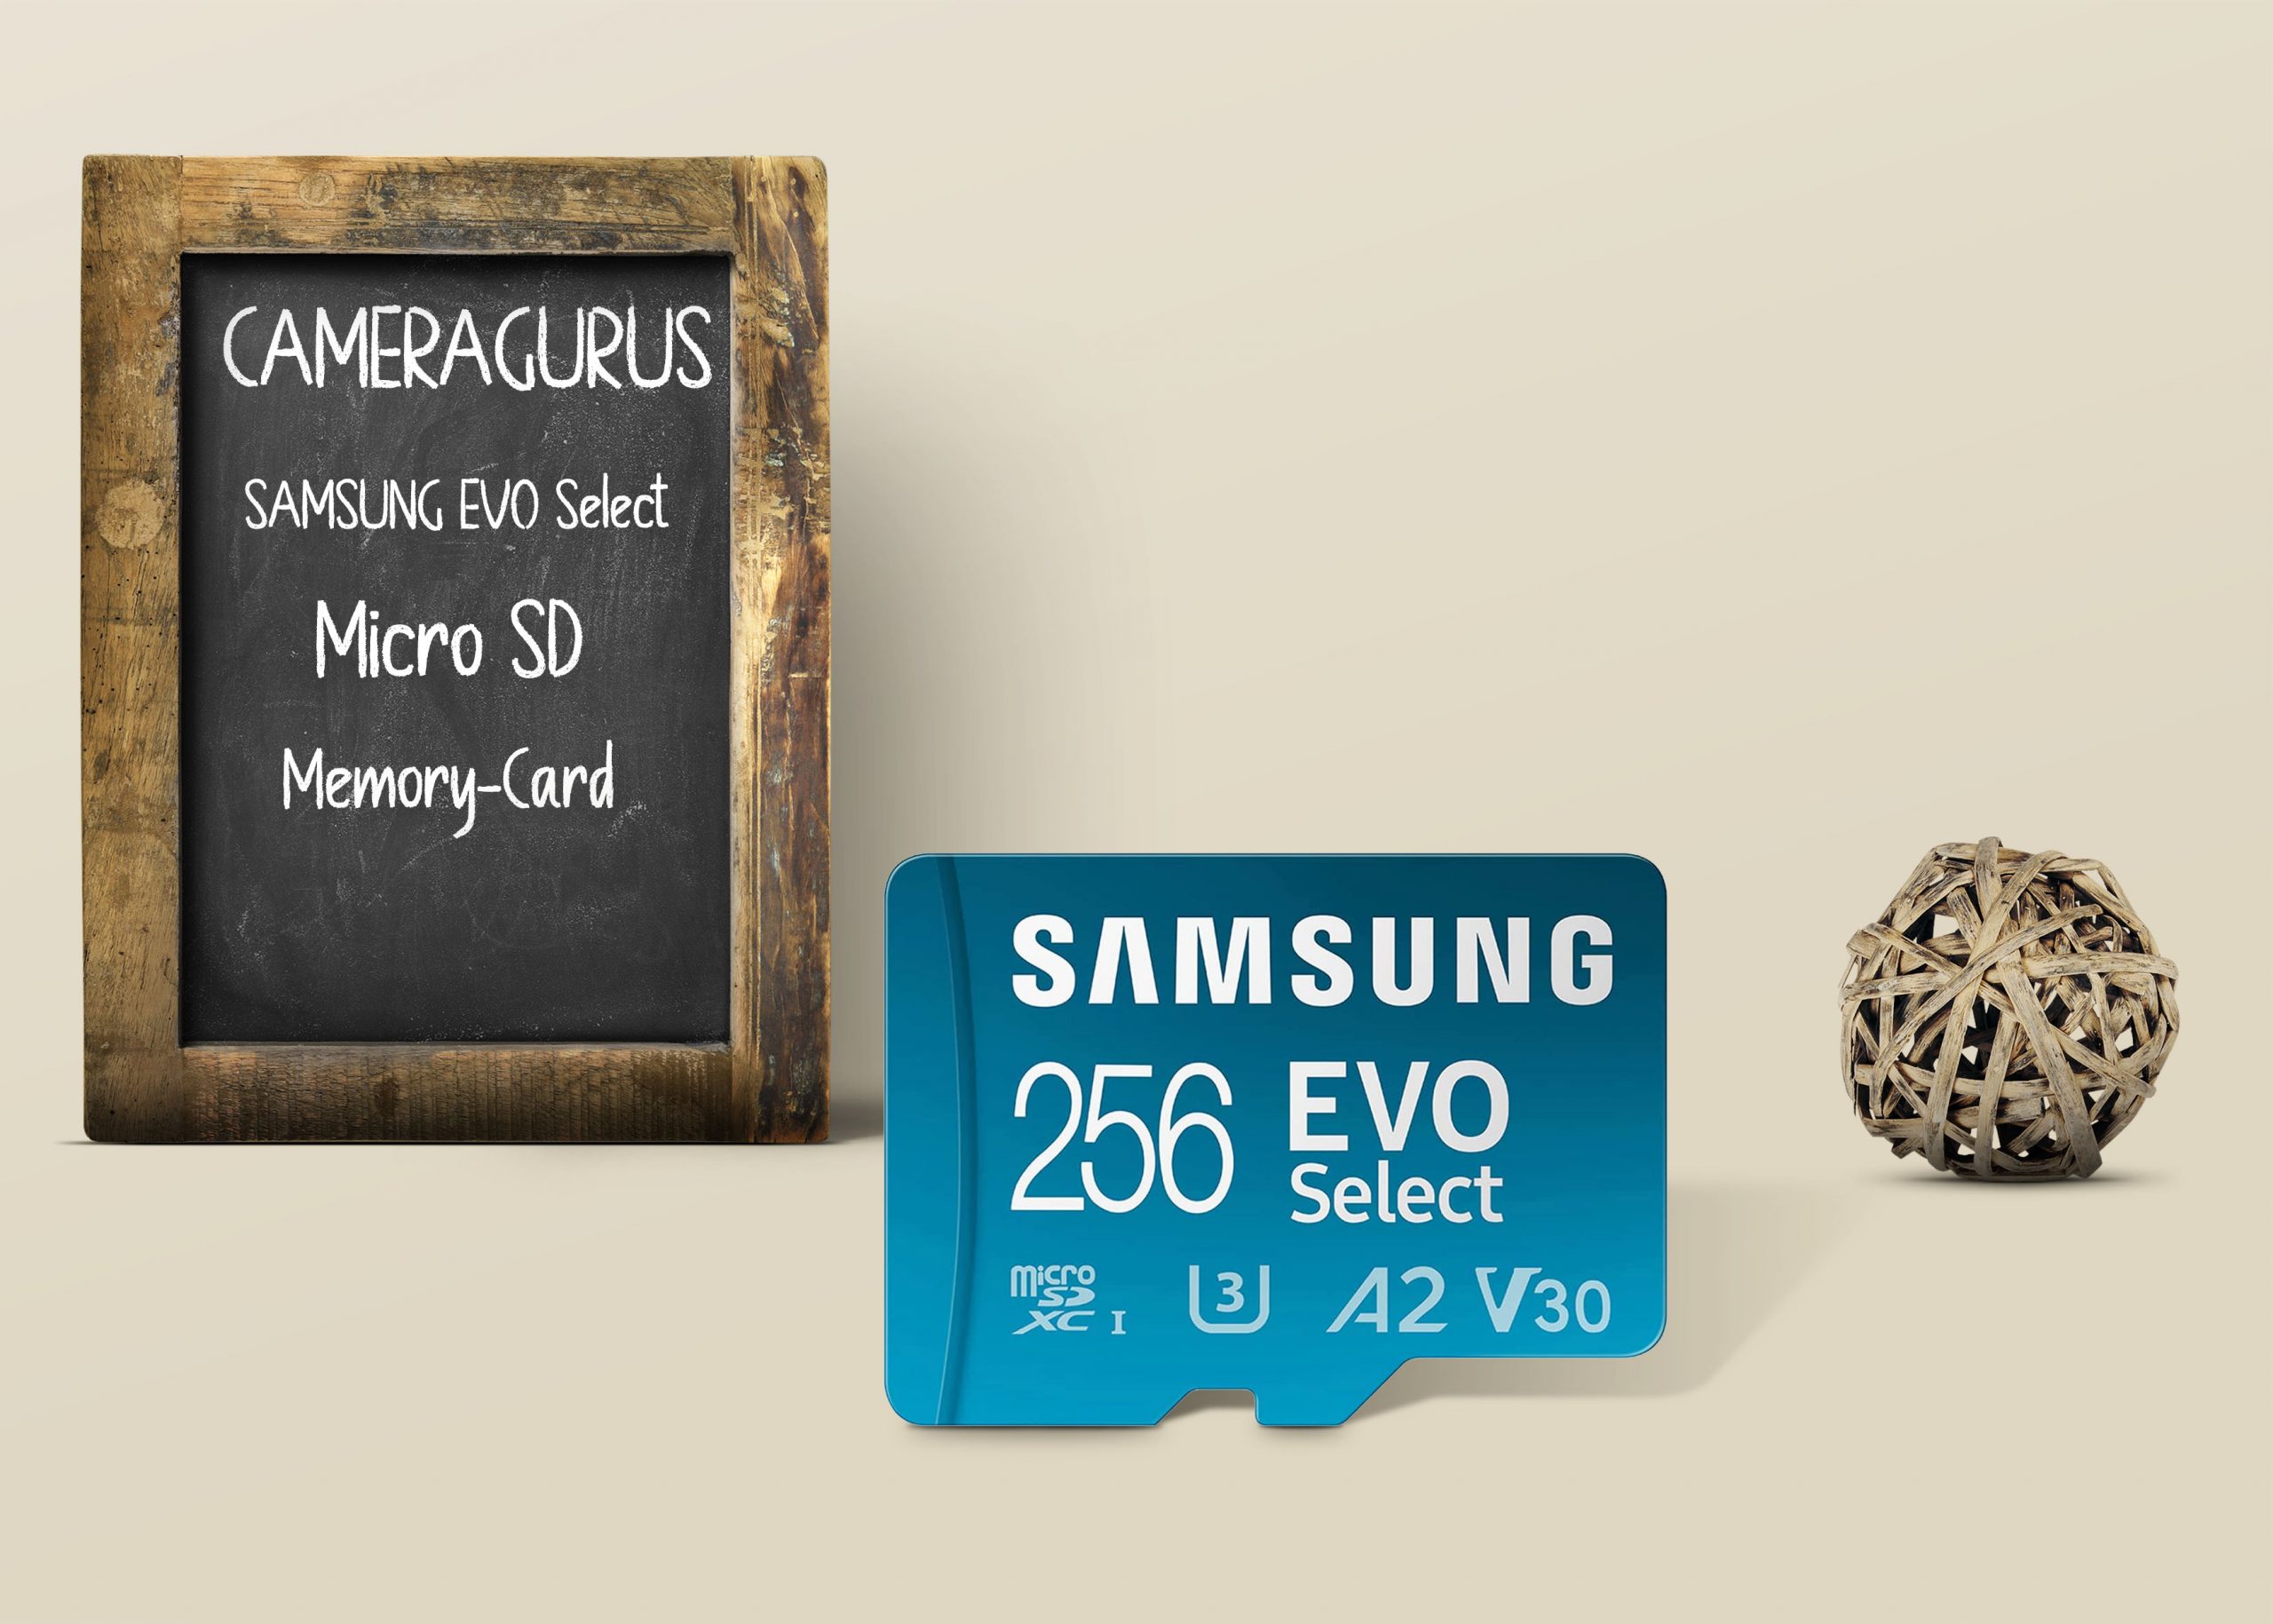 SAMSUNG EVO Select Micro SD Memory Card